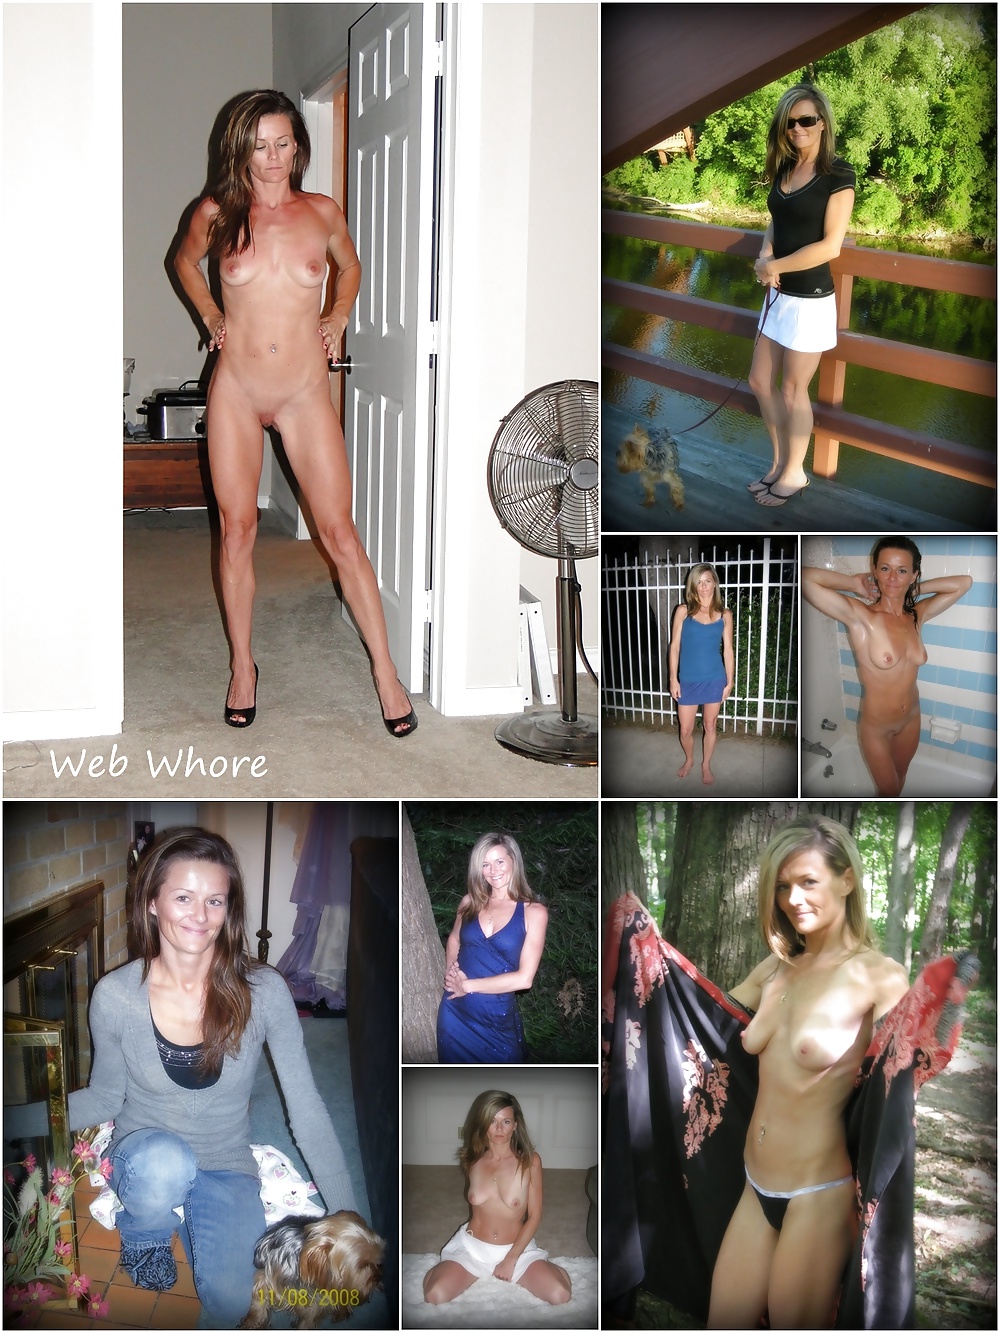 Free Dressed Undressed Exposed Web Sluts 17 photos